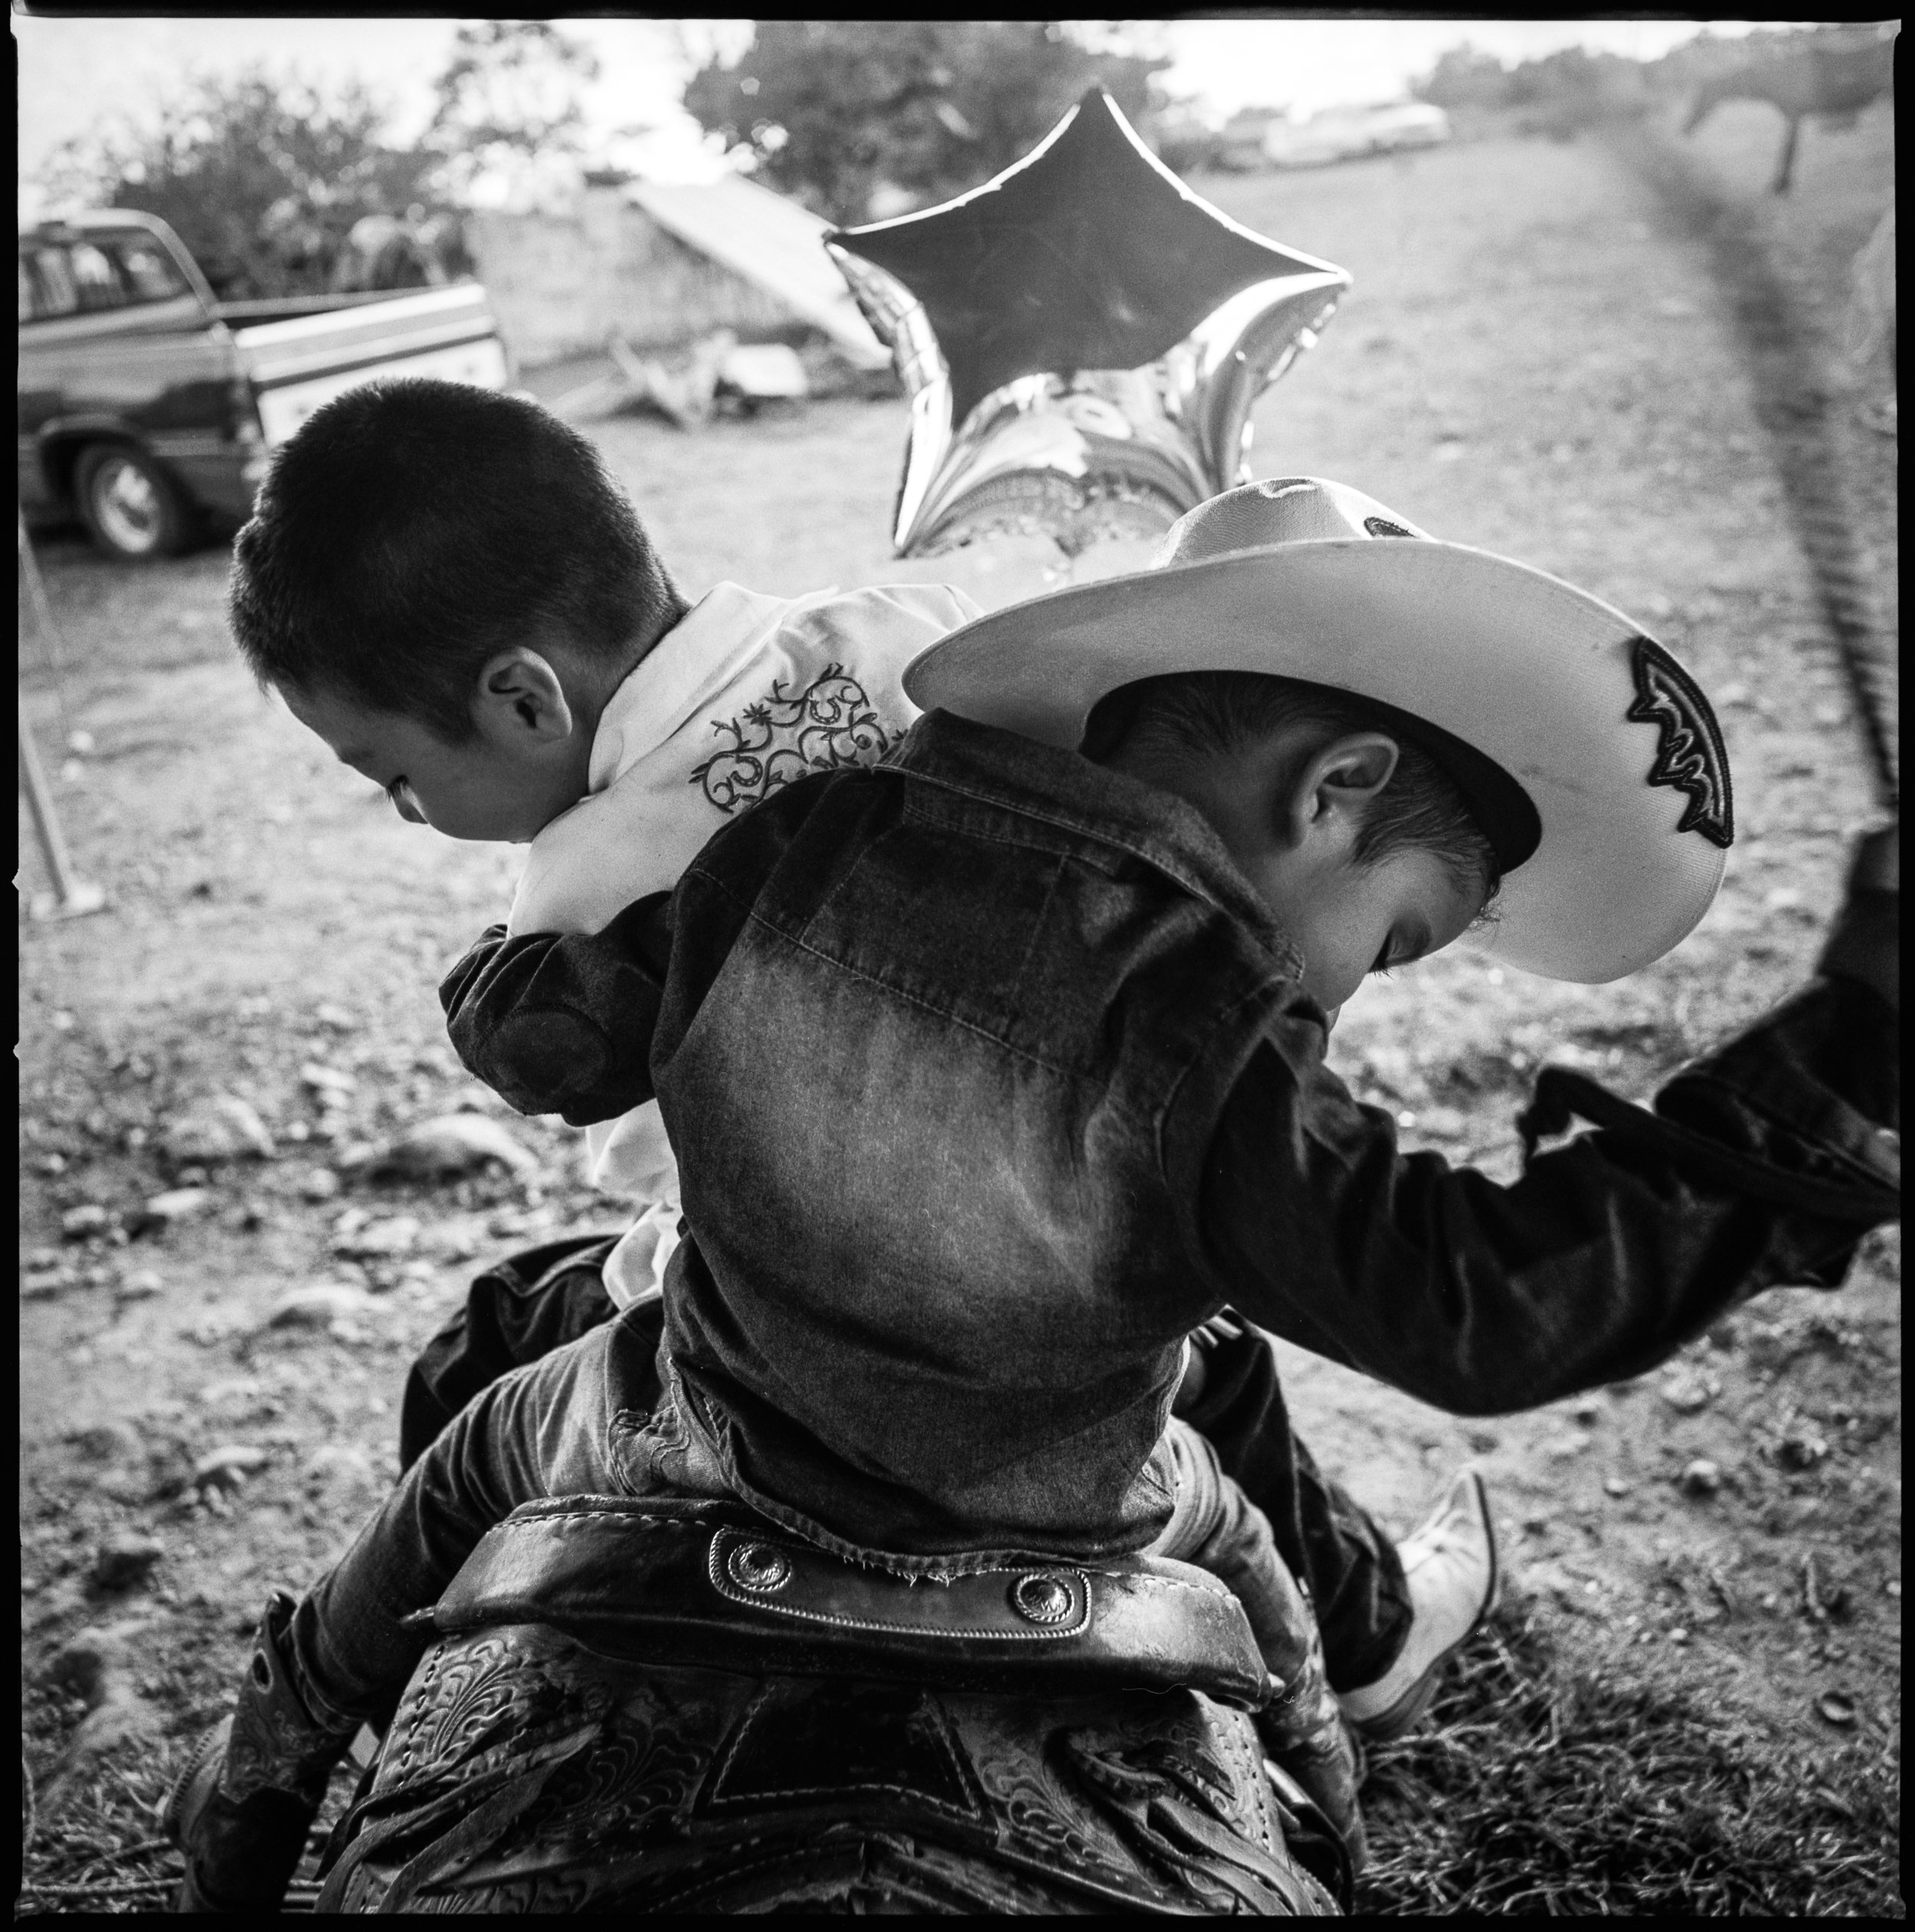  Kids practicing riding San Jose de Rodeo, Mexico, 2018    1:1  